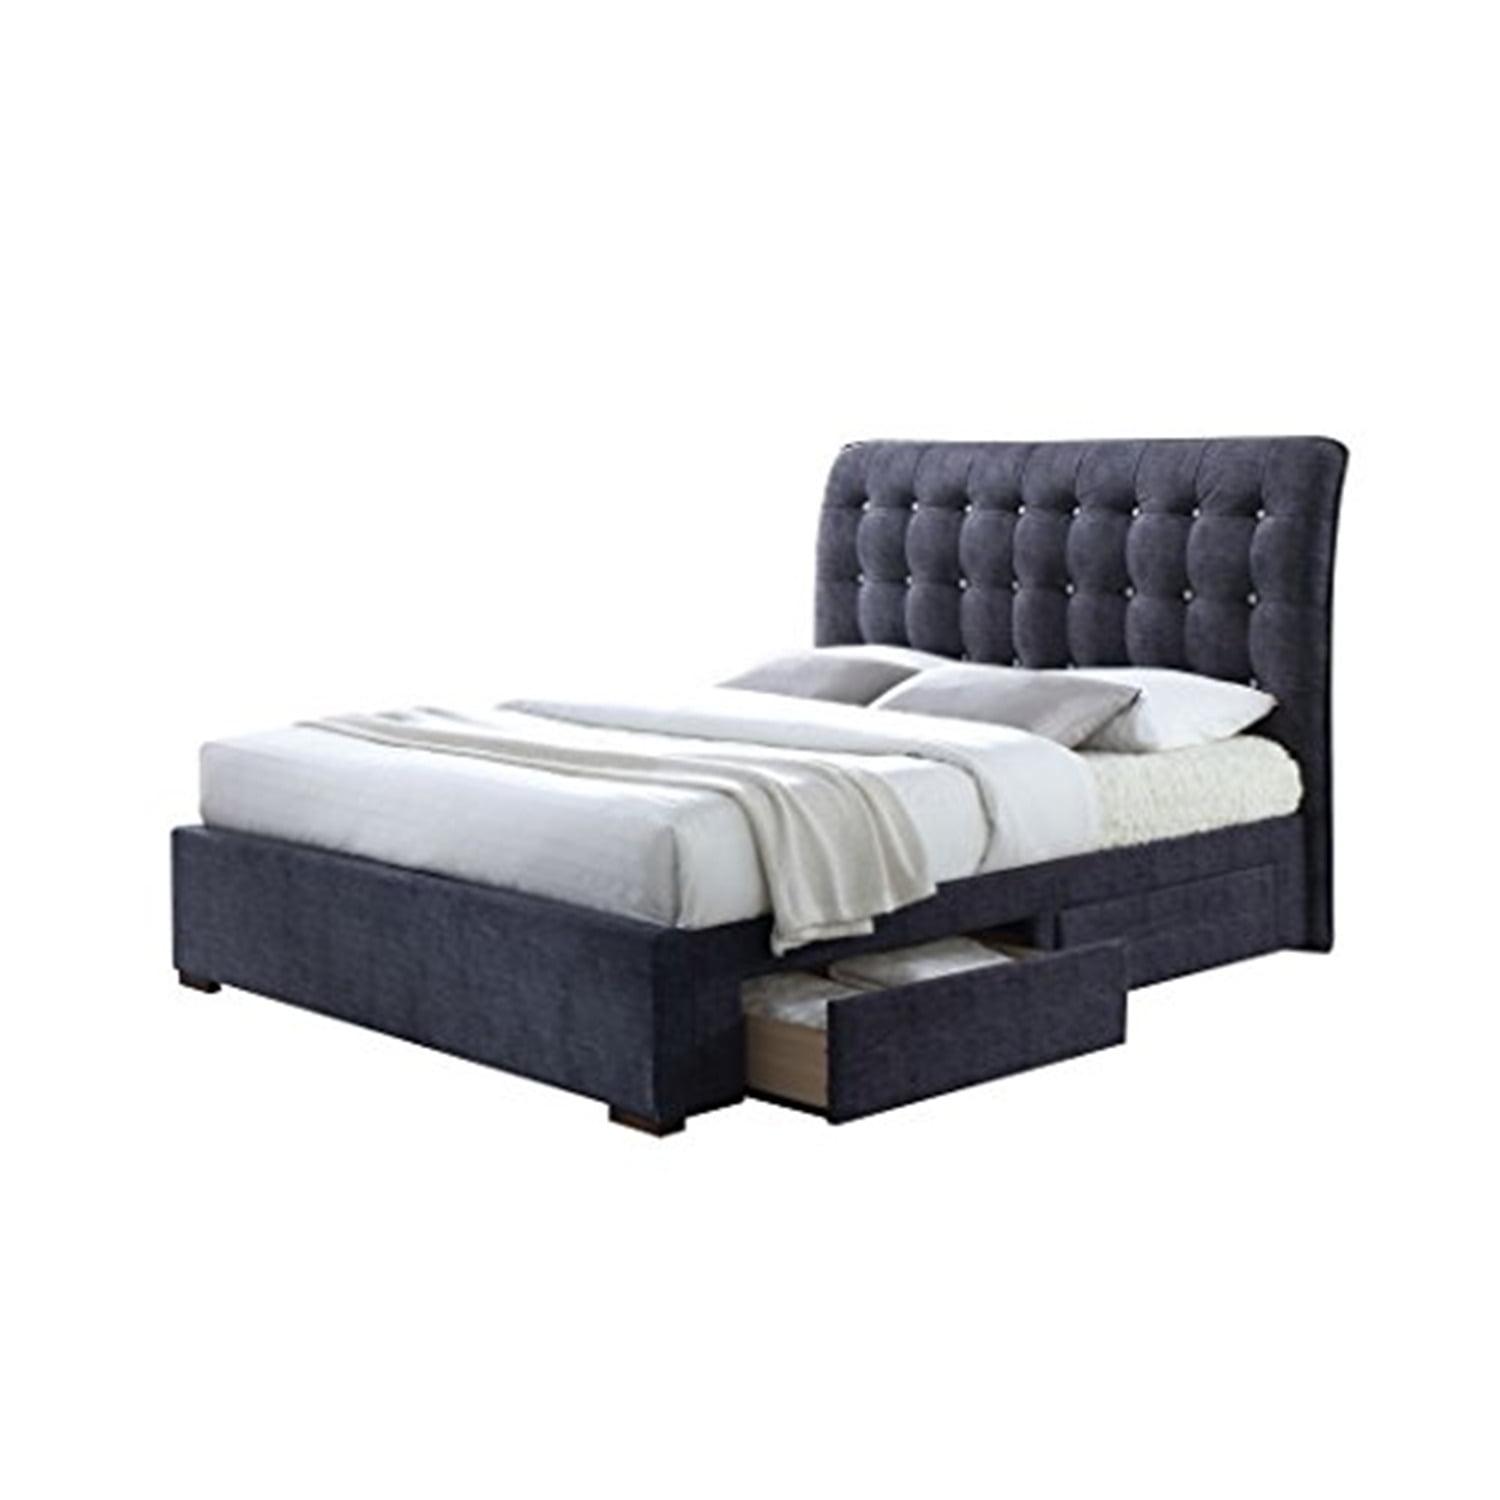 Elegant Eastern King Dark Gray Tufted Upholstered Bed with Storage